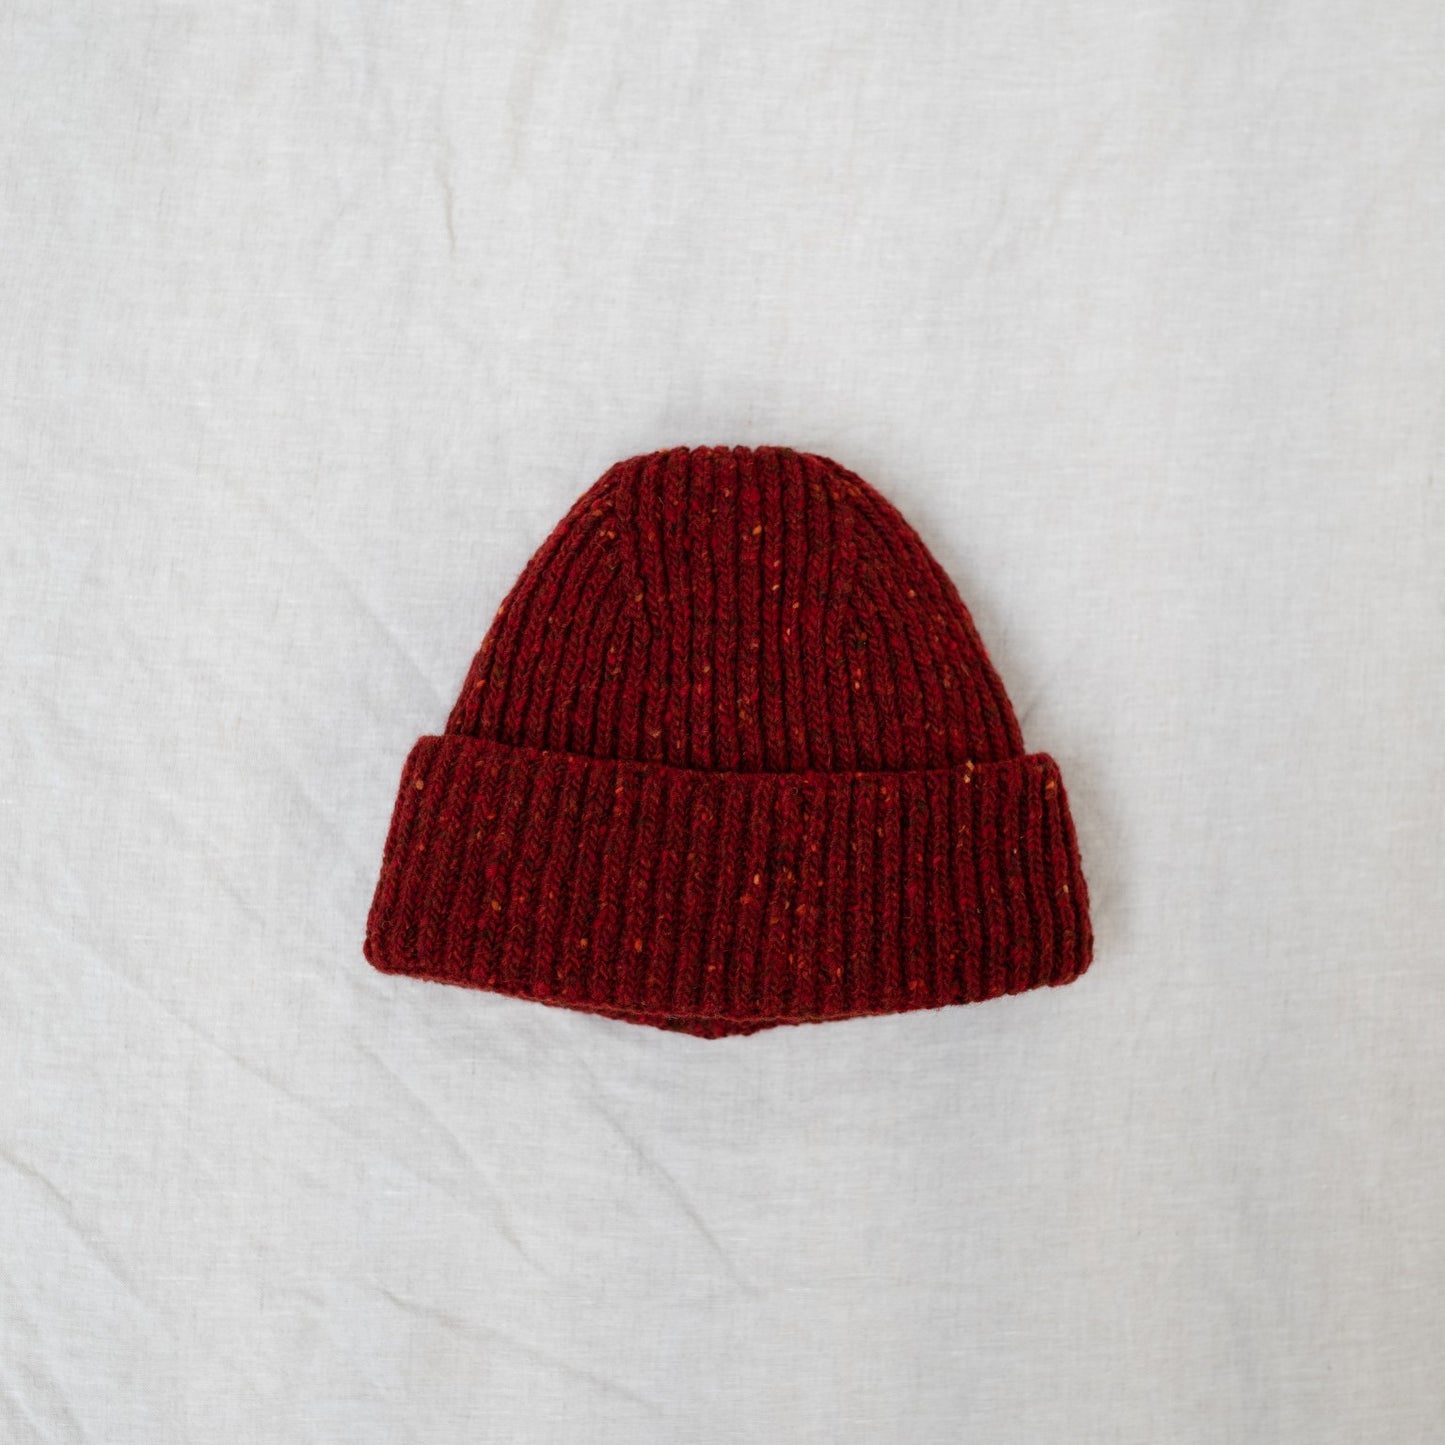 Donegal Merino Wool Beanie Hat in Brick Red